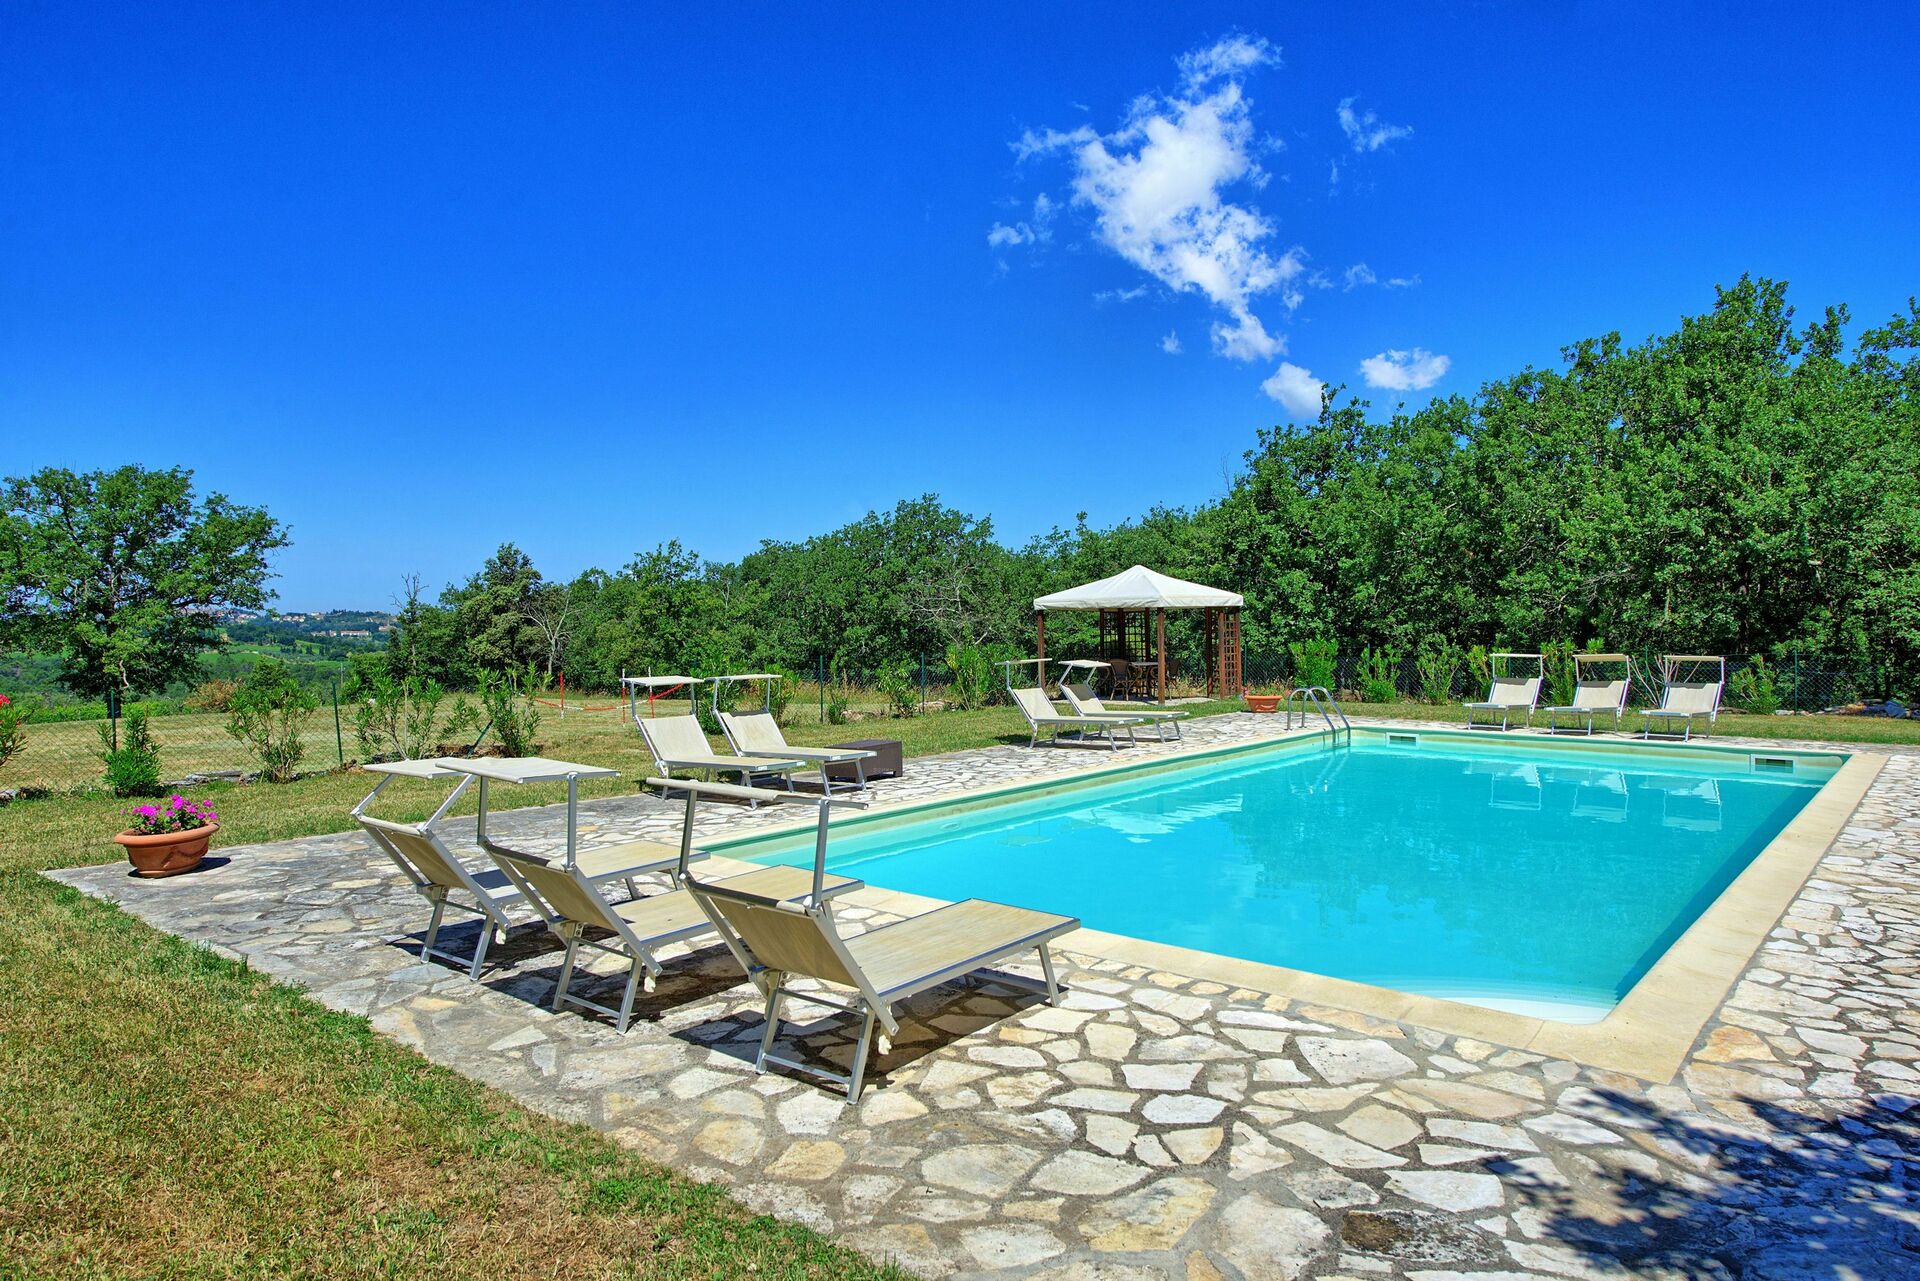 453_e09a7af_Agriturismo San Donato met zwembad, loopafstand dorp, appartementen, villa, vlakbij Florence gelegen, Toscane (3)